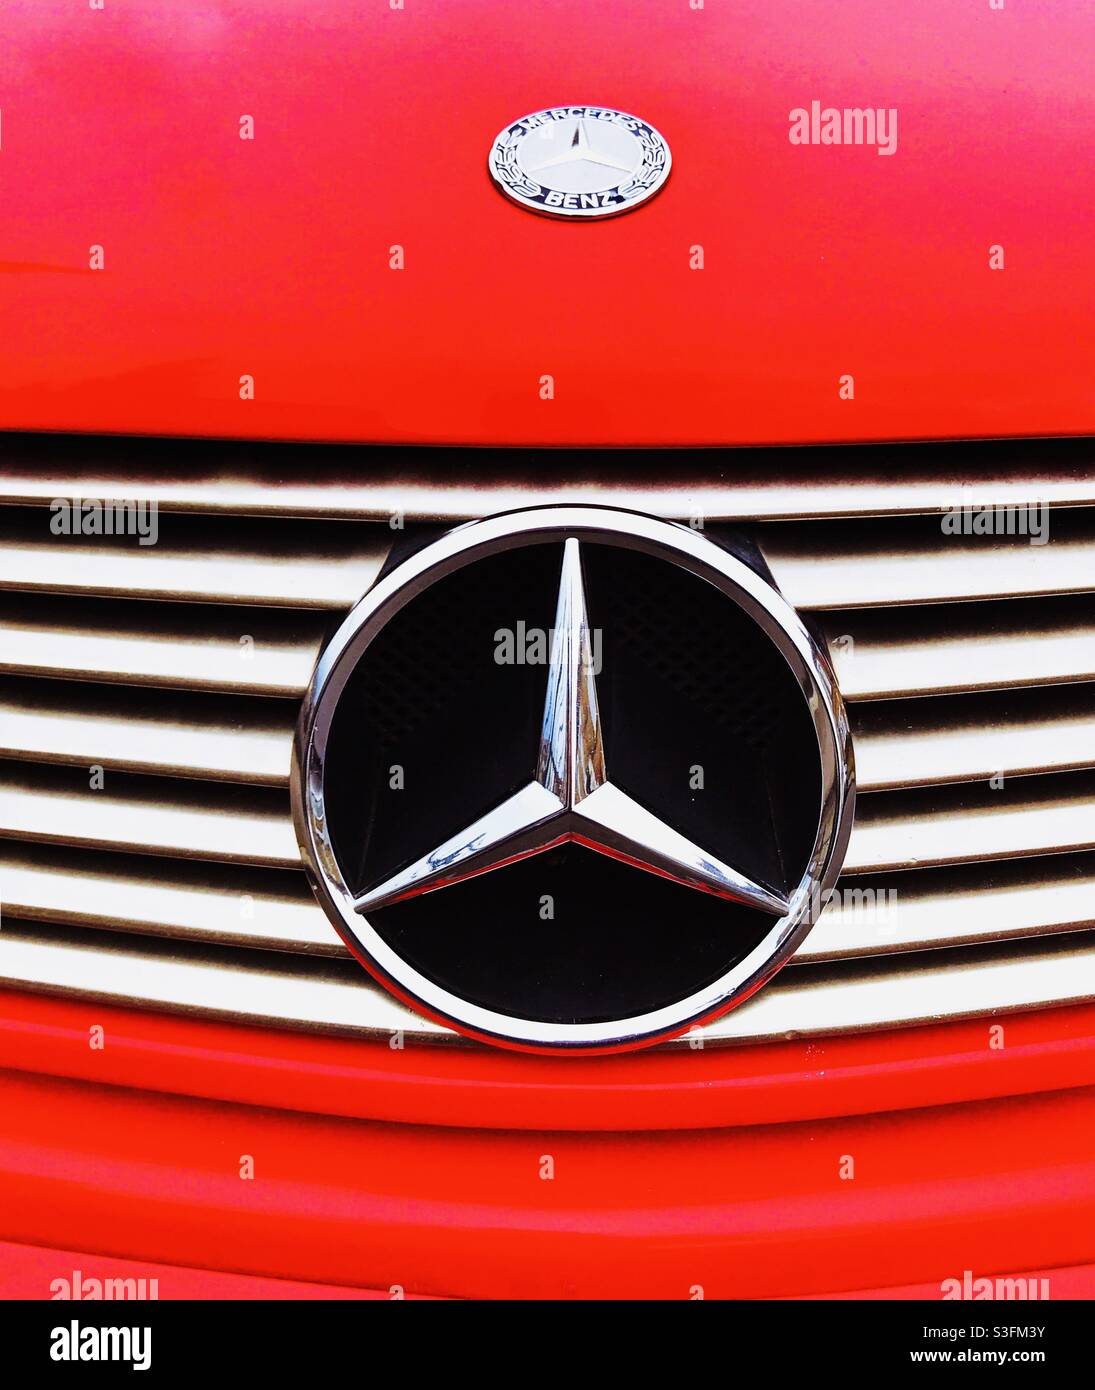 The iconic Mercedes Benz logo. Stock Photo